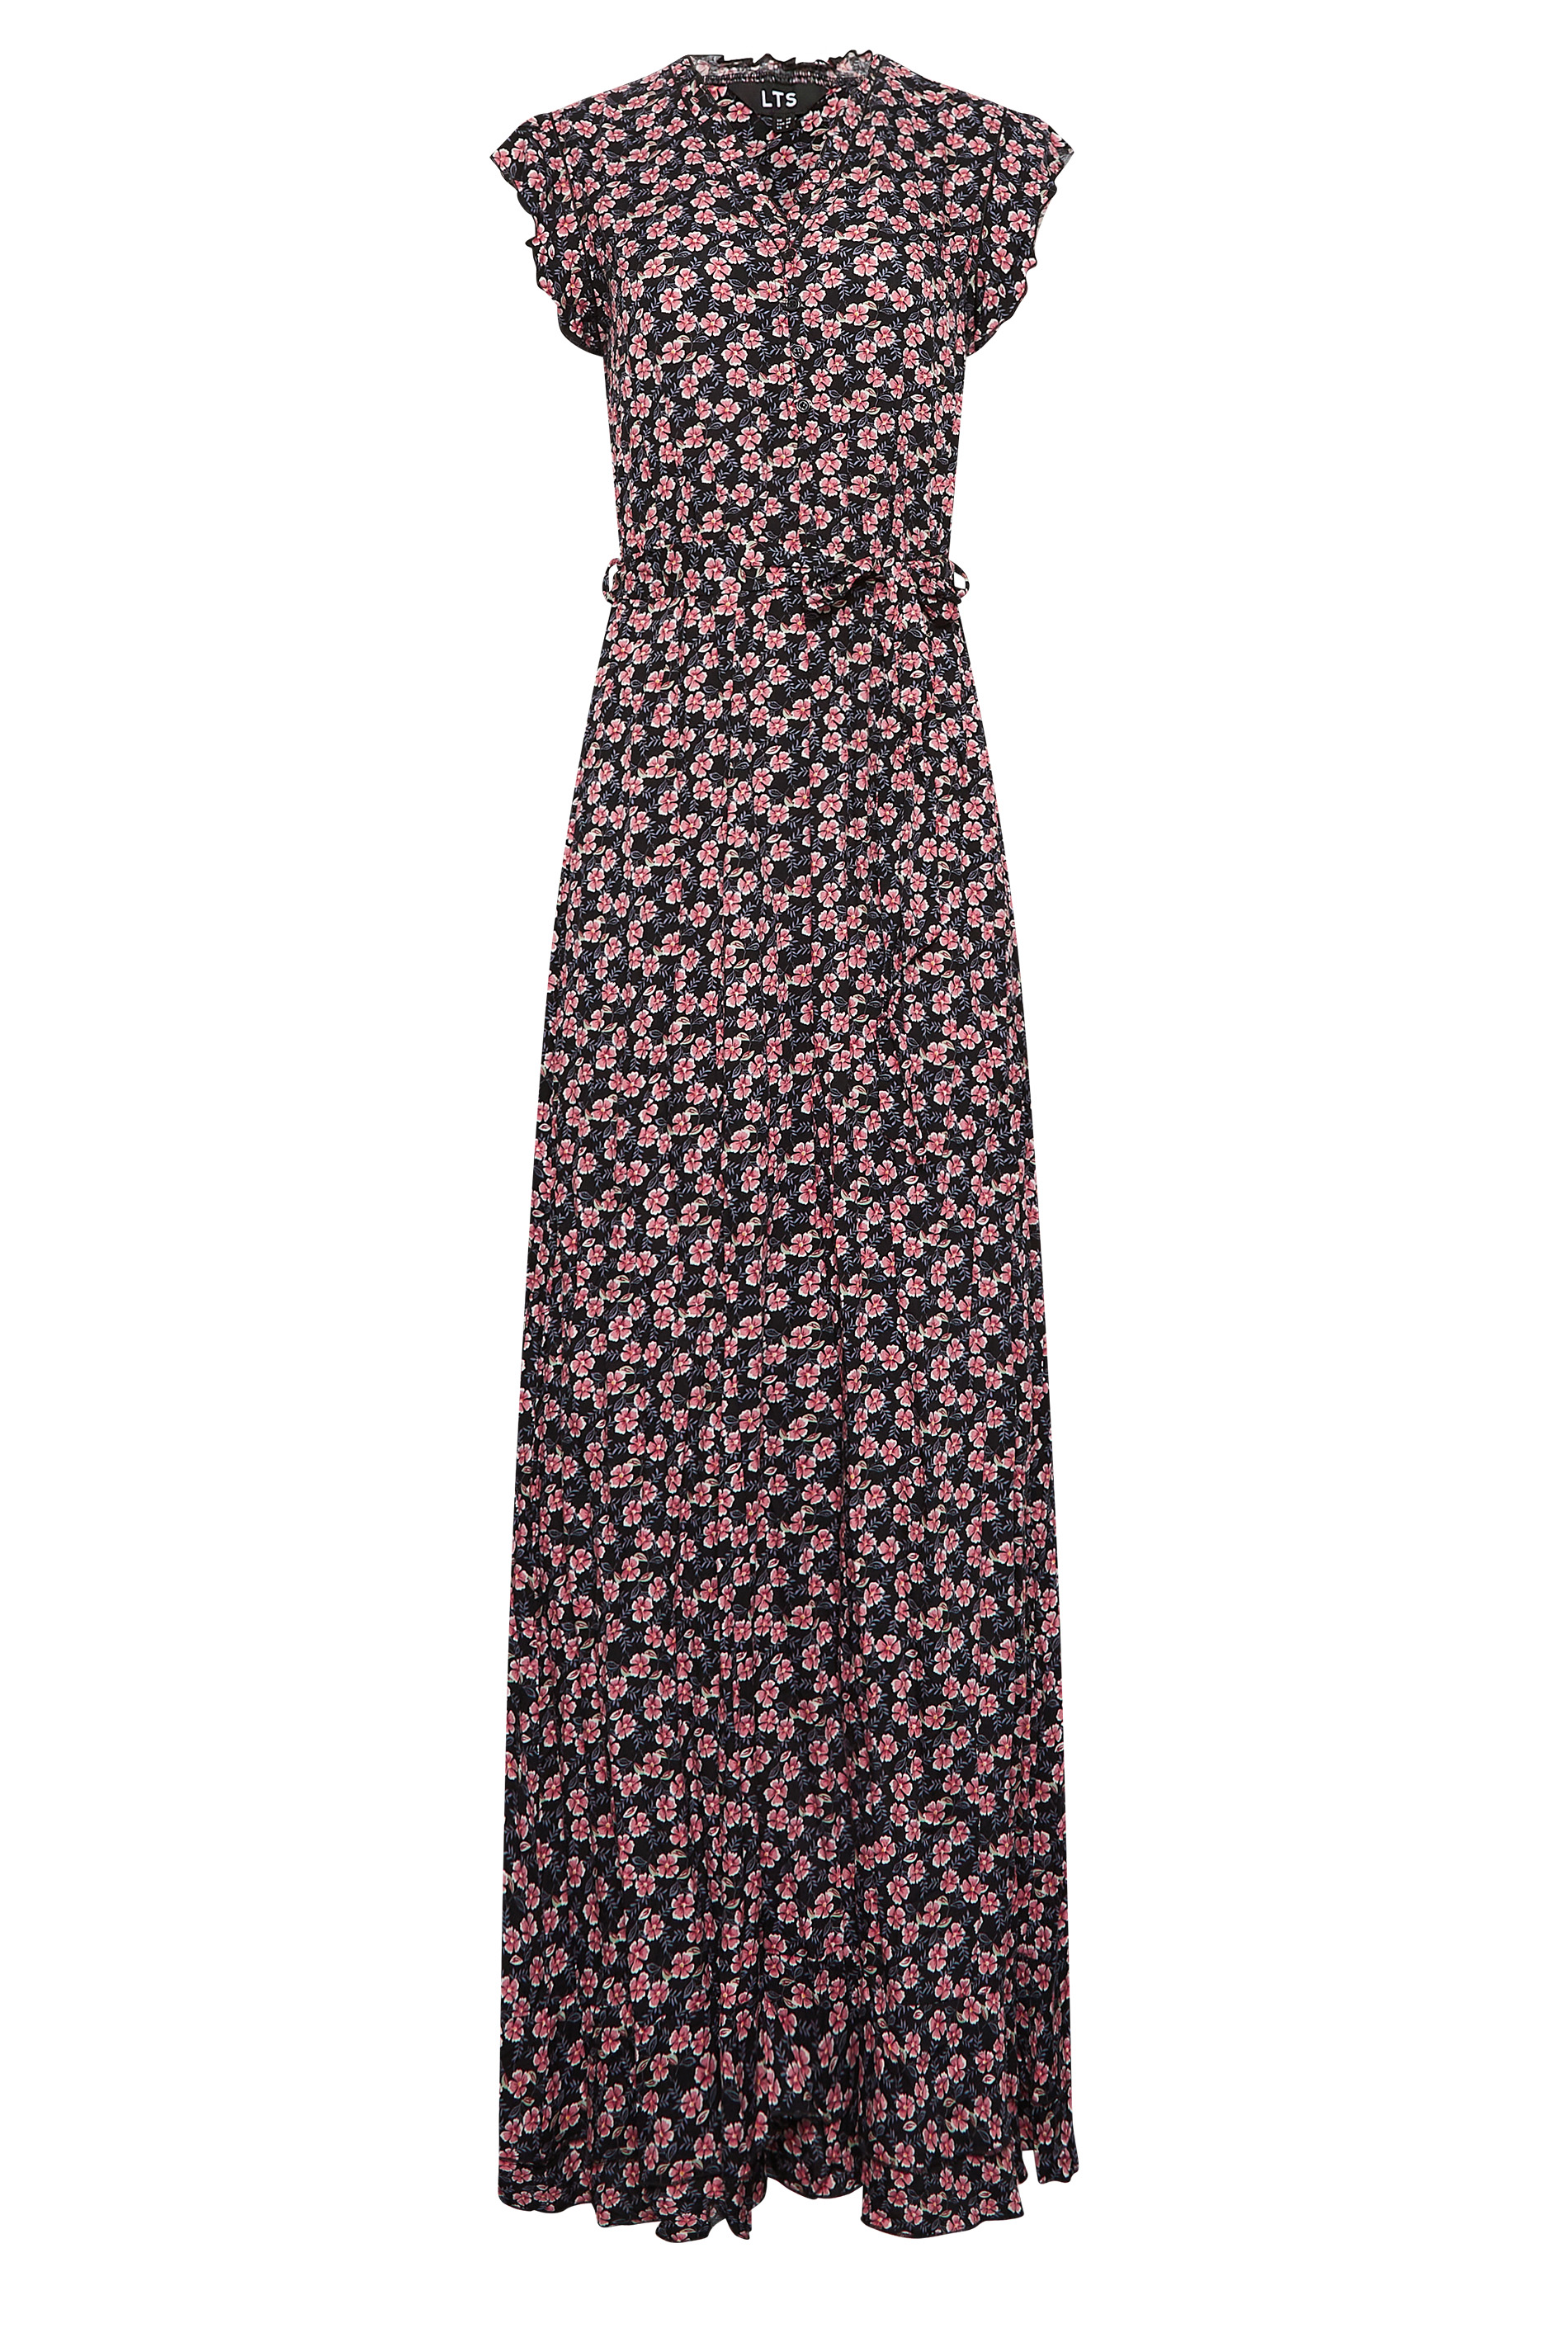 LTS Tall Women's Black Ditsy Floral Frill Maxi Dress | Long Tall Sally 2